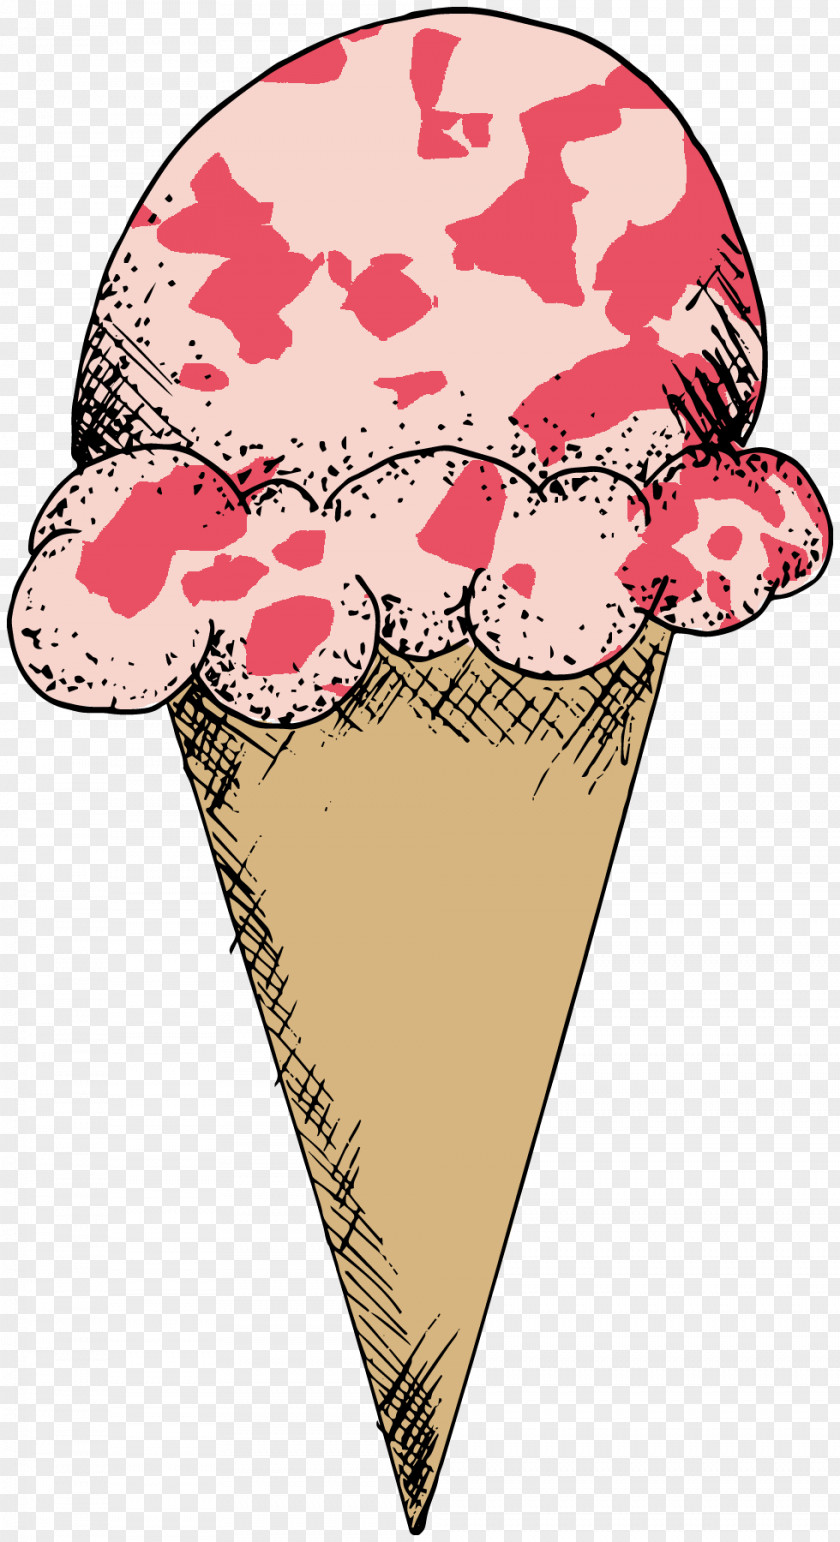 Bebas Sign Ice Cream Cones Illustration Clip Art Heart PNG